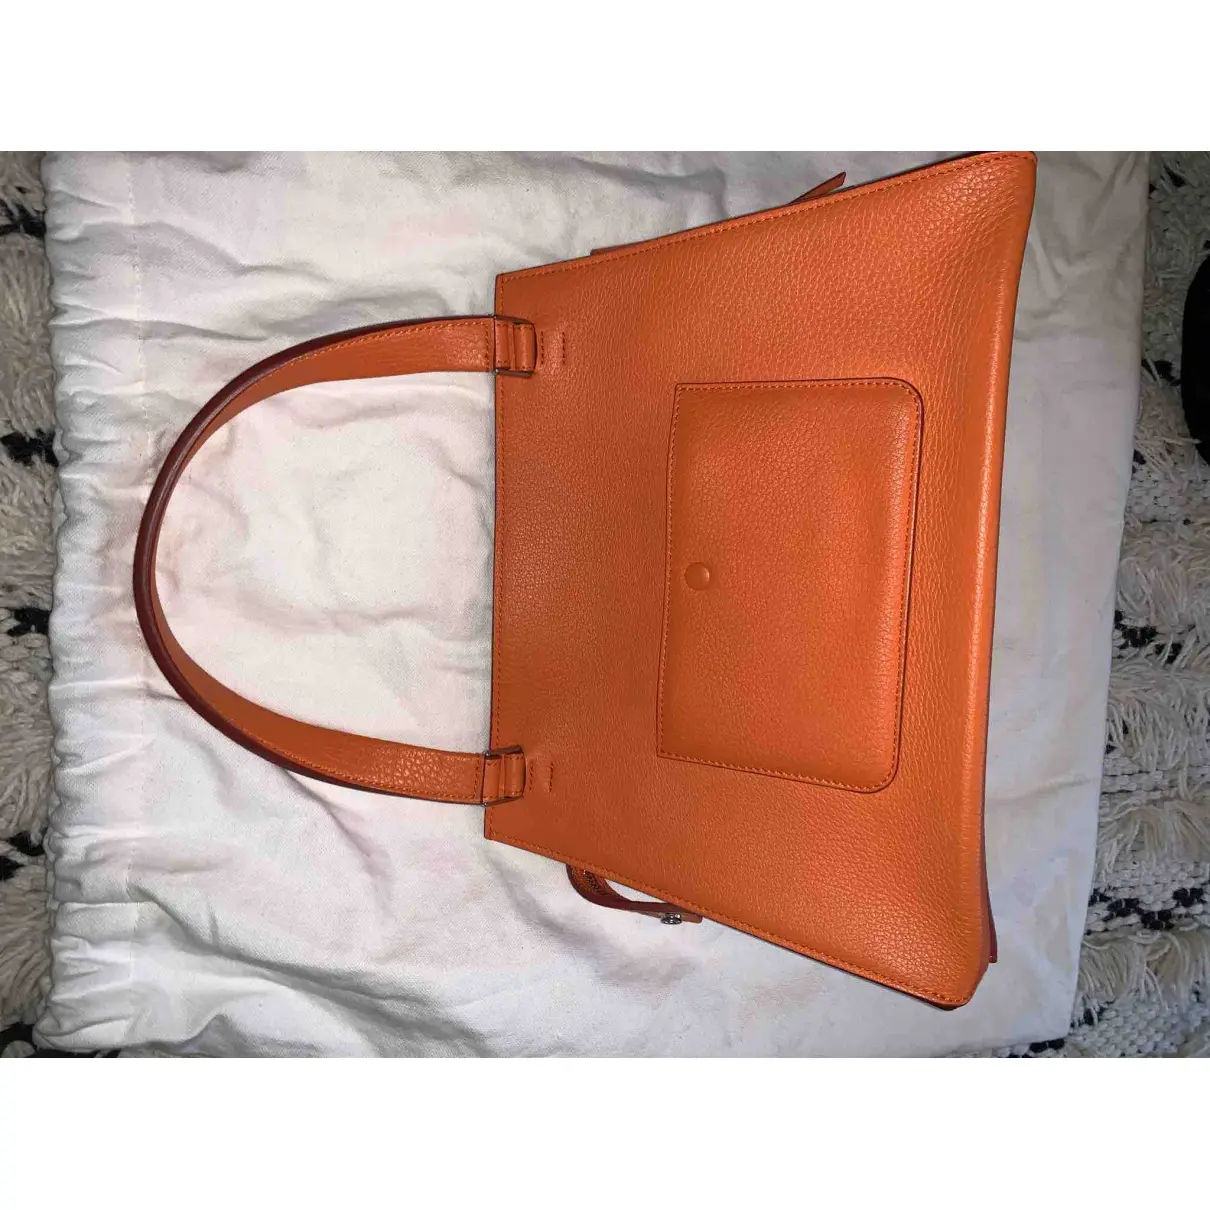 Buy Celine Edge leather handbag online